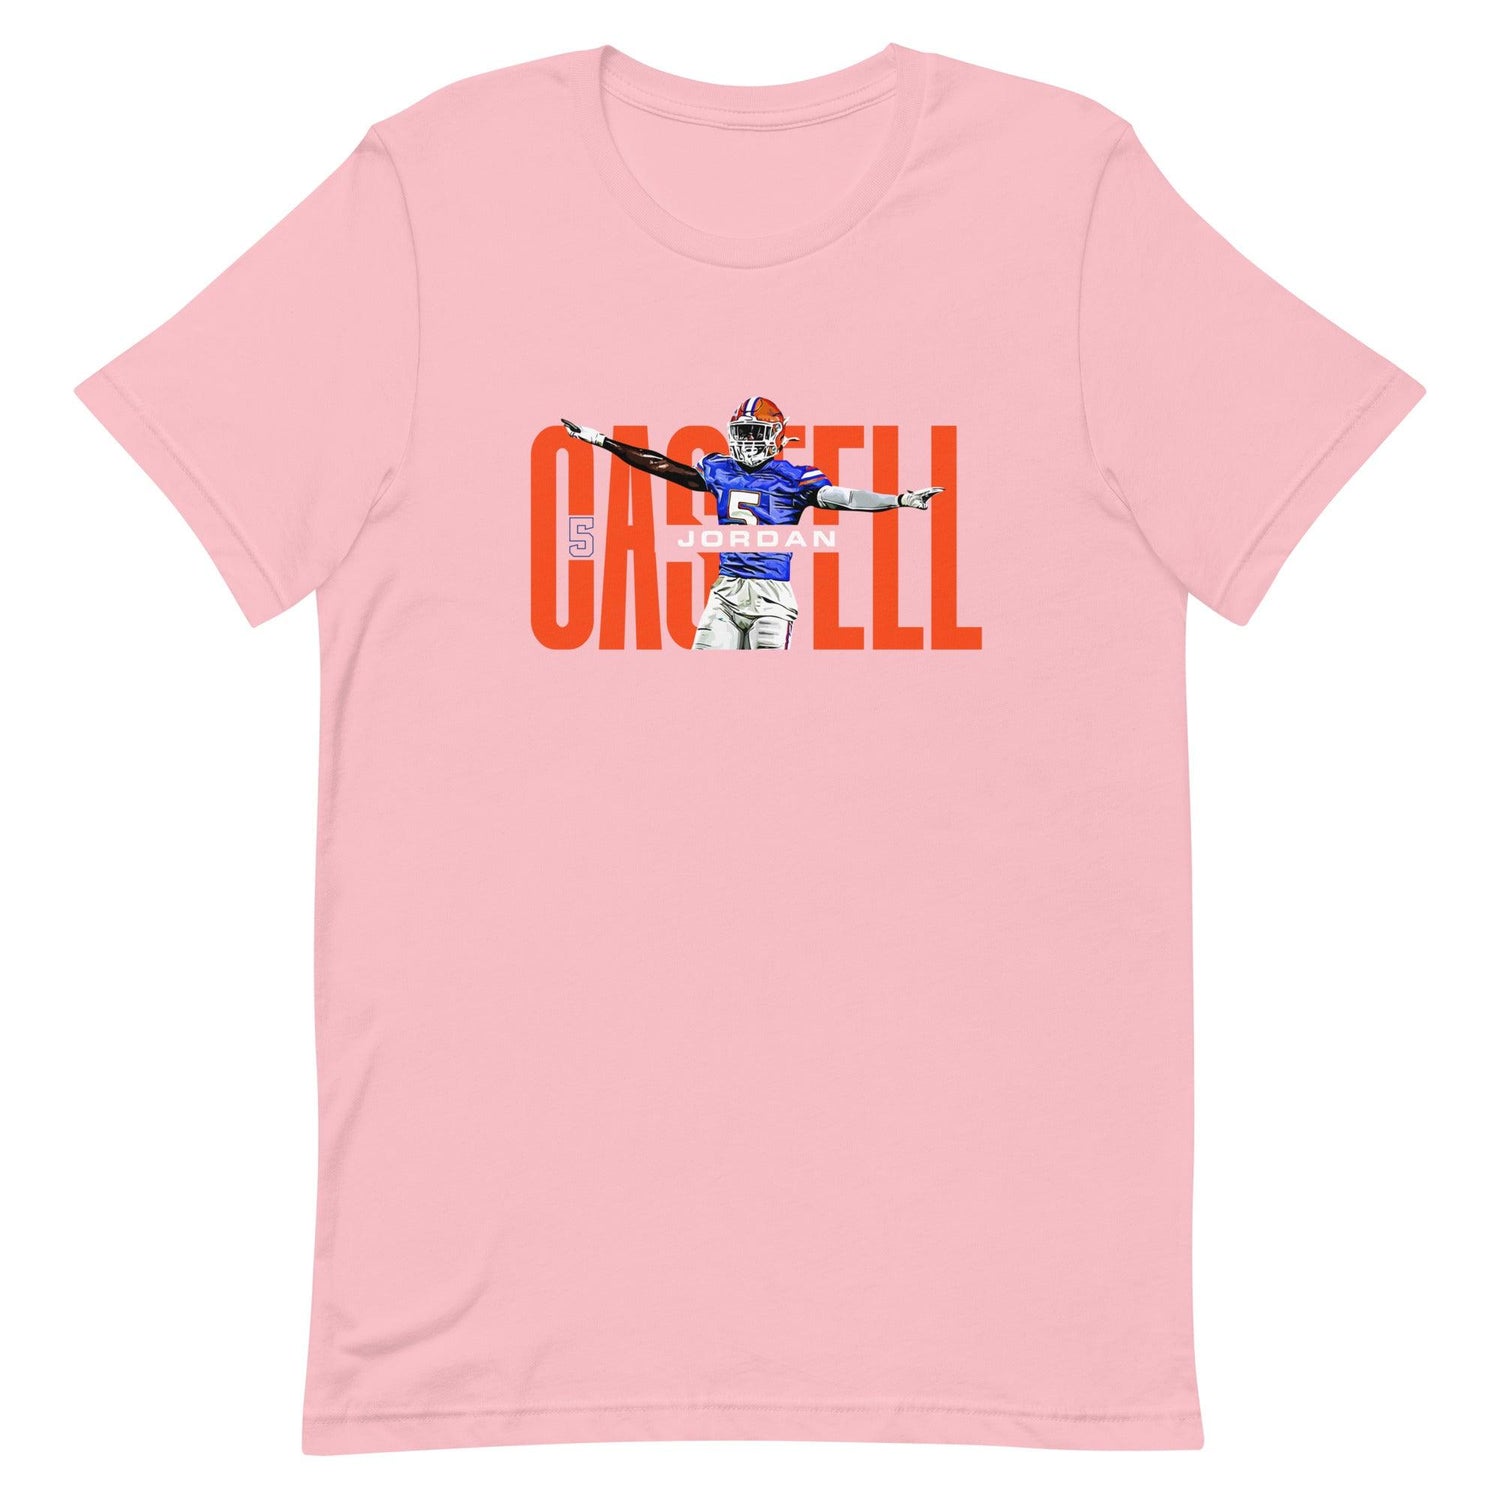 Jordan Castell "Gameday" t-shirt - Fan Arch